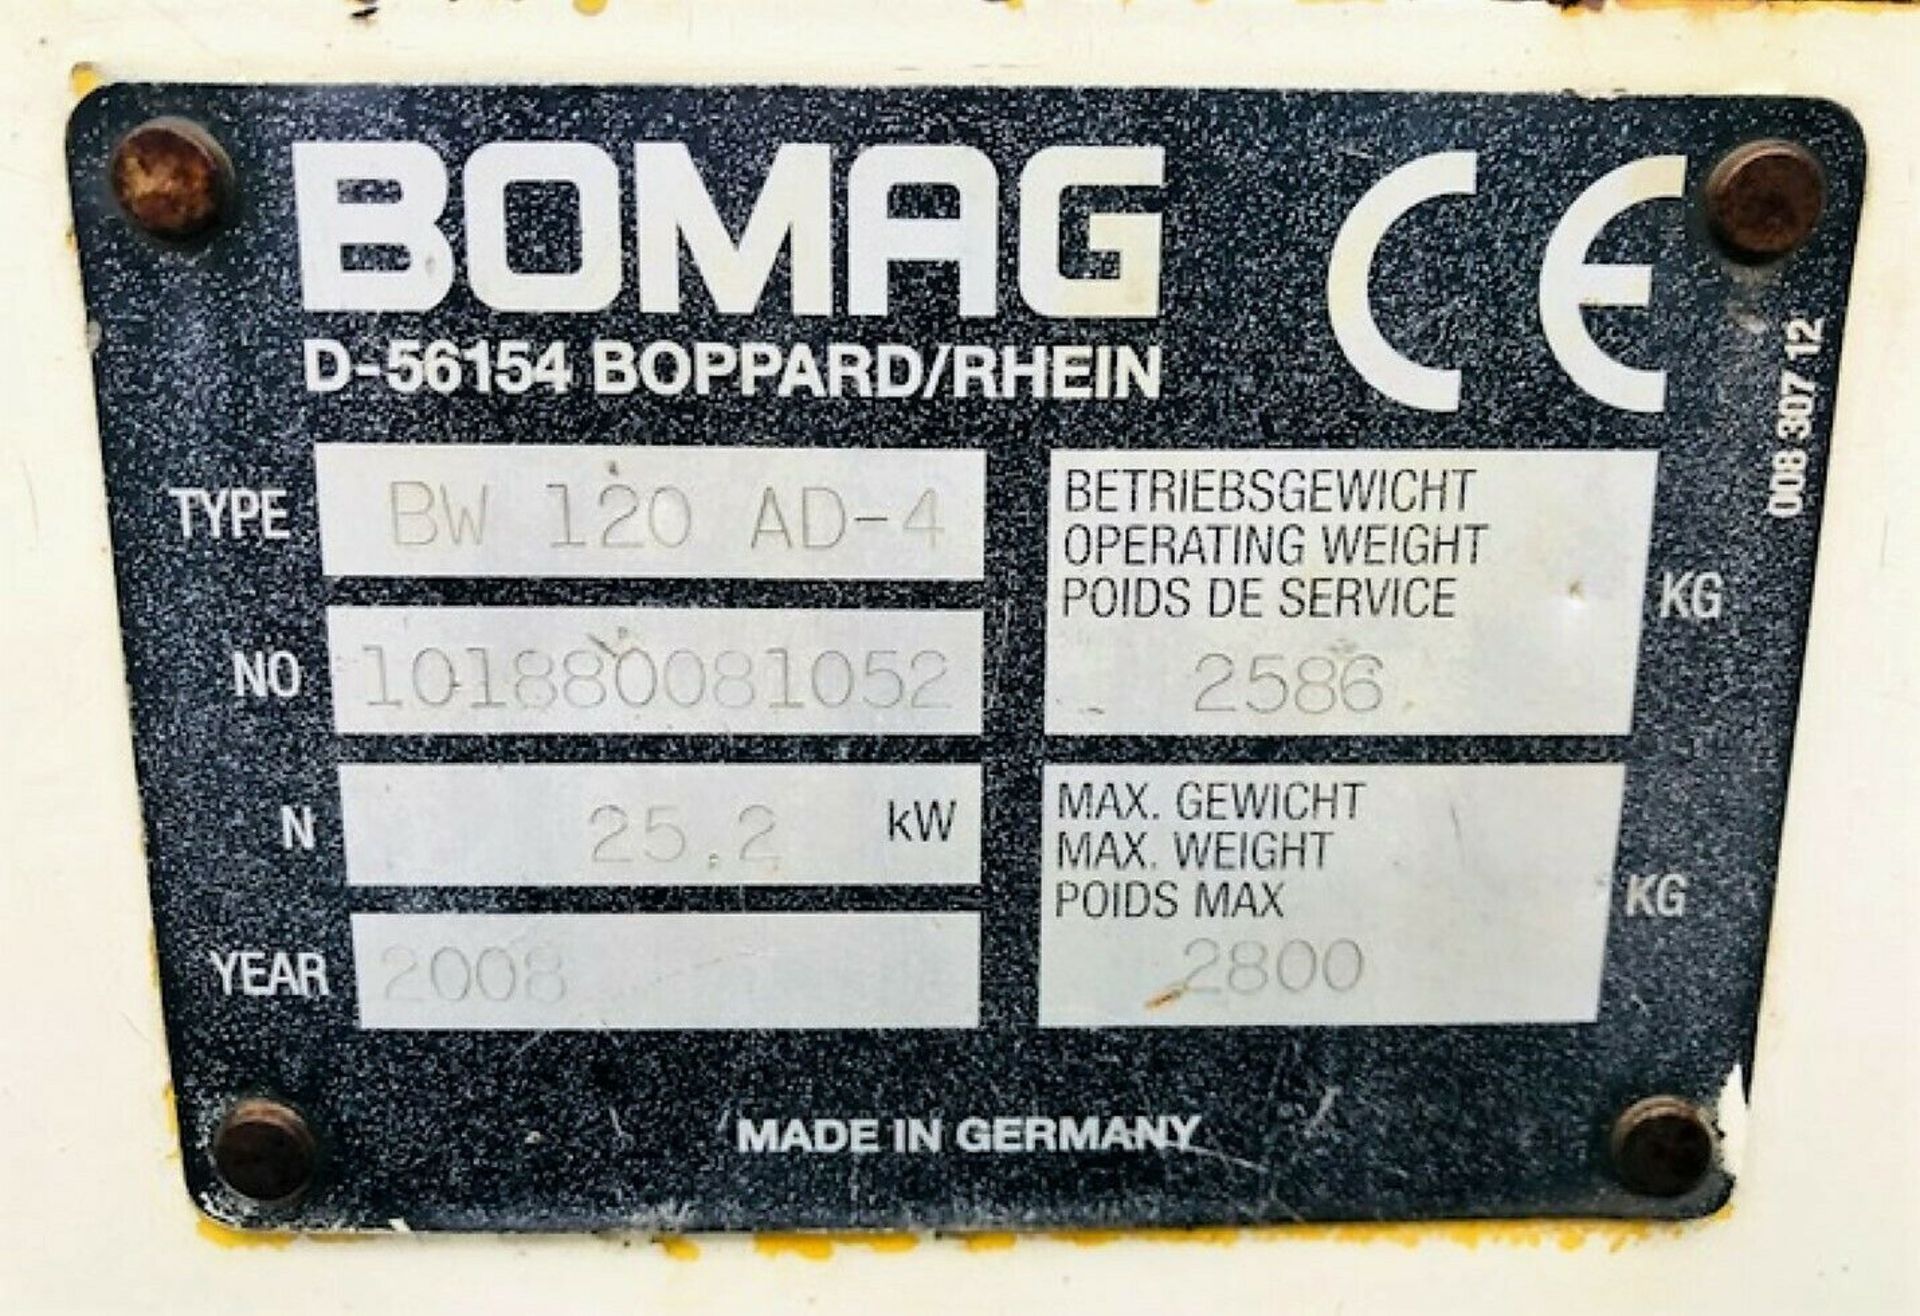 Bomag BW 120 AD-4 Tandem Roller - Image 10 of 10